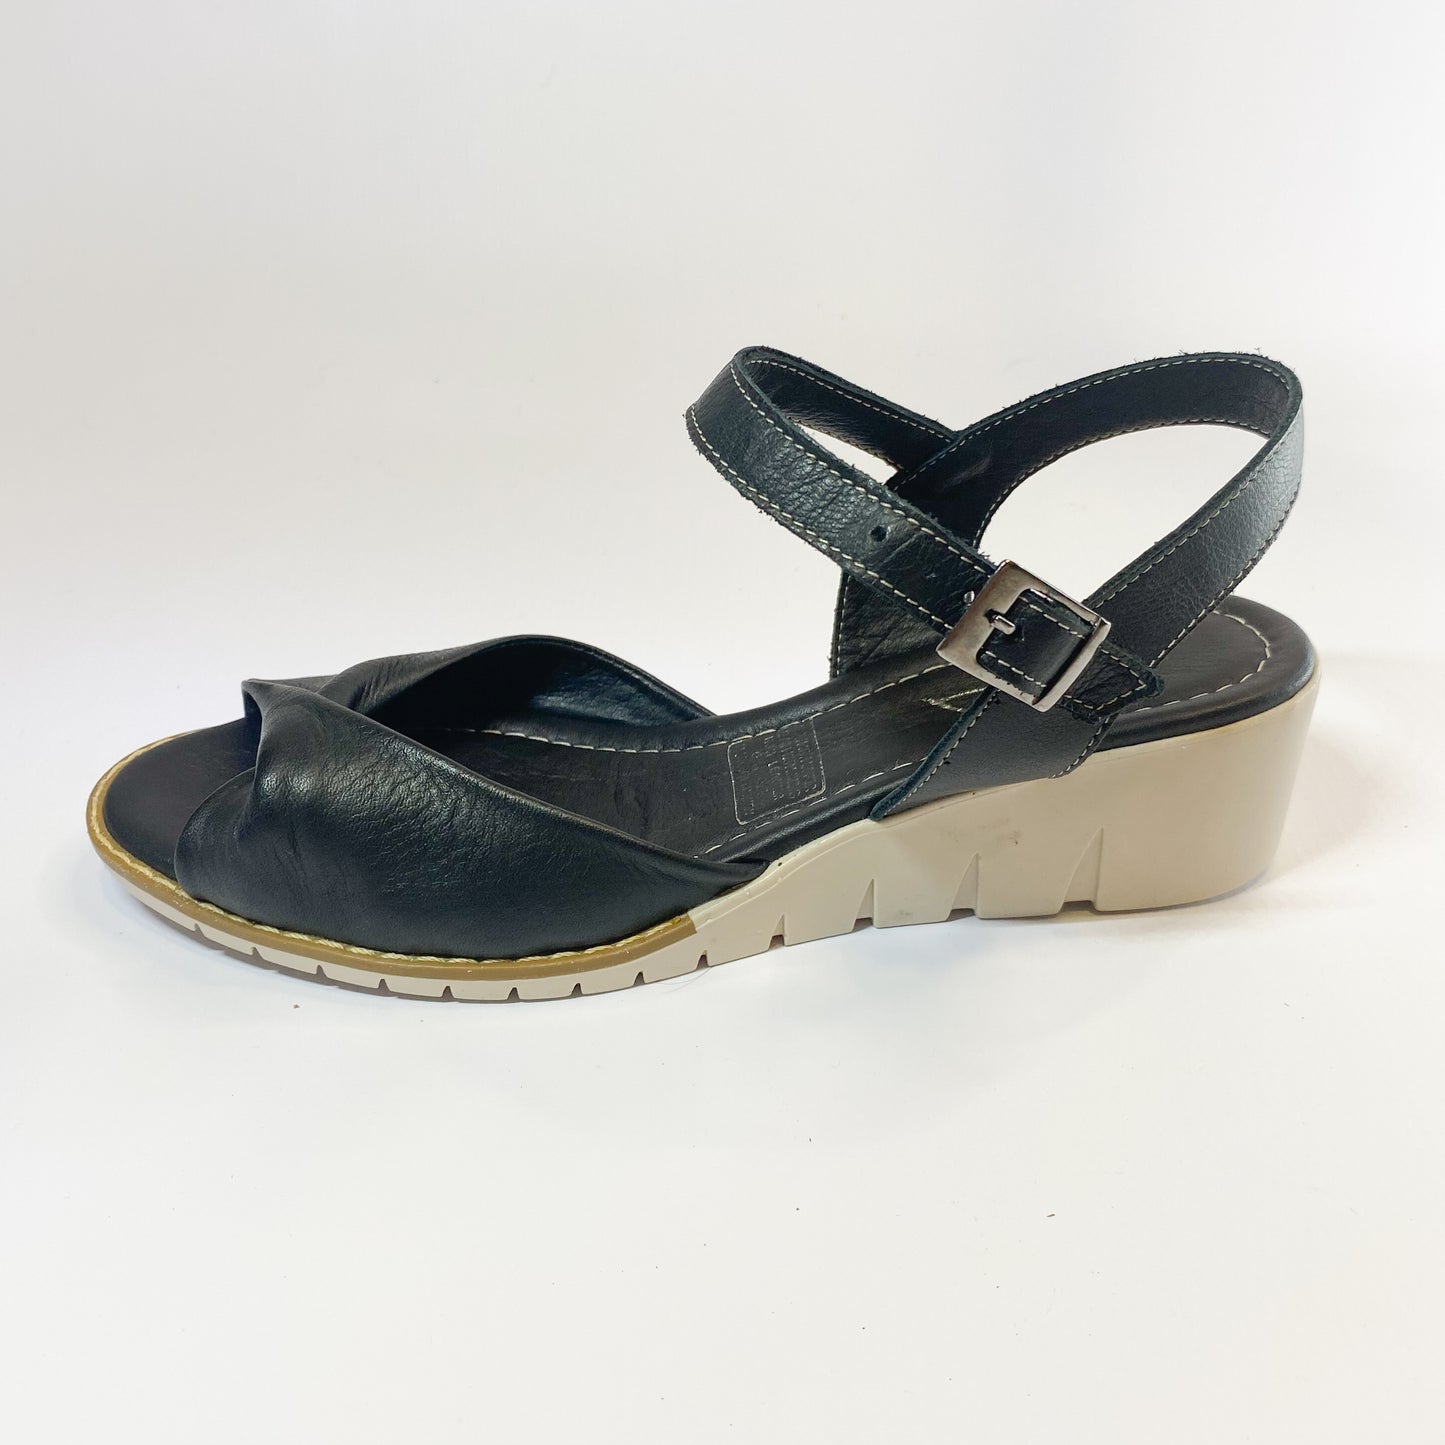 Gia black leather wedge sandal